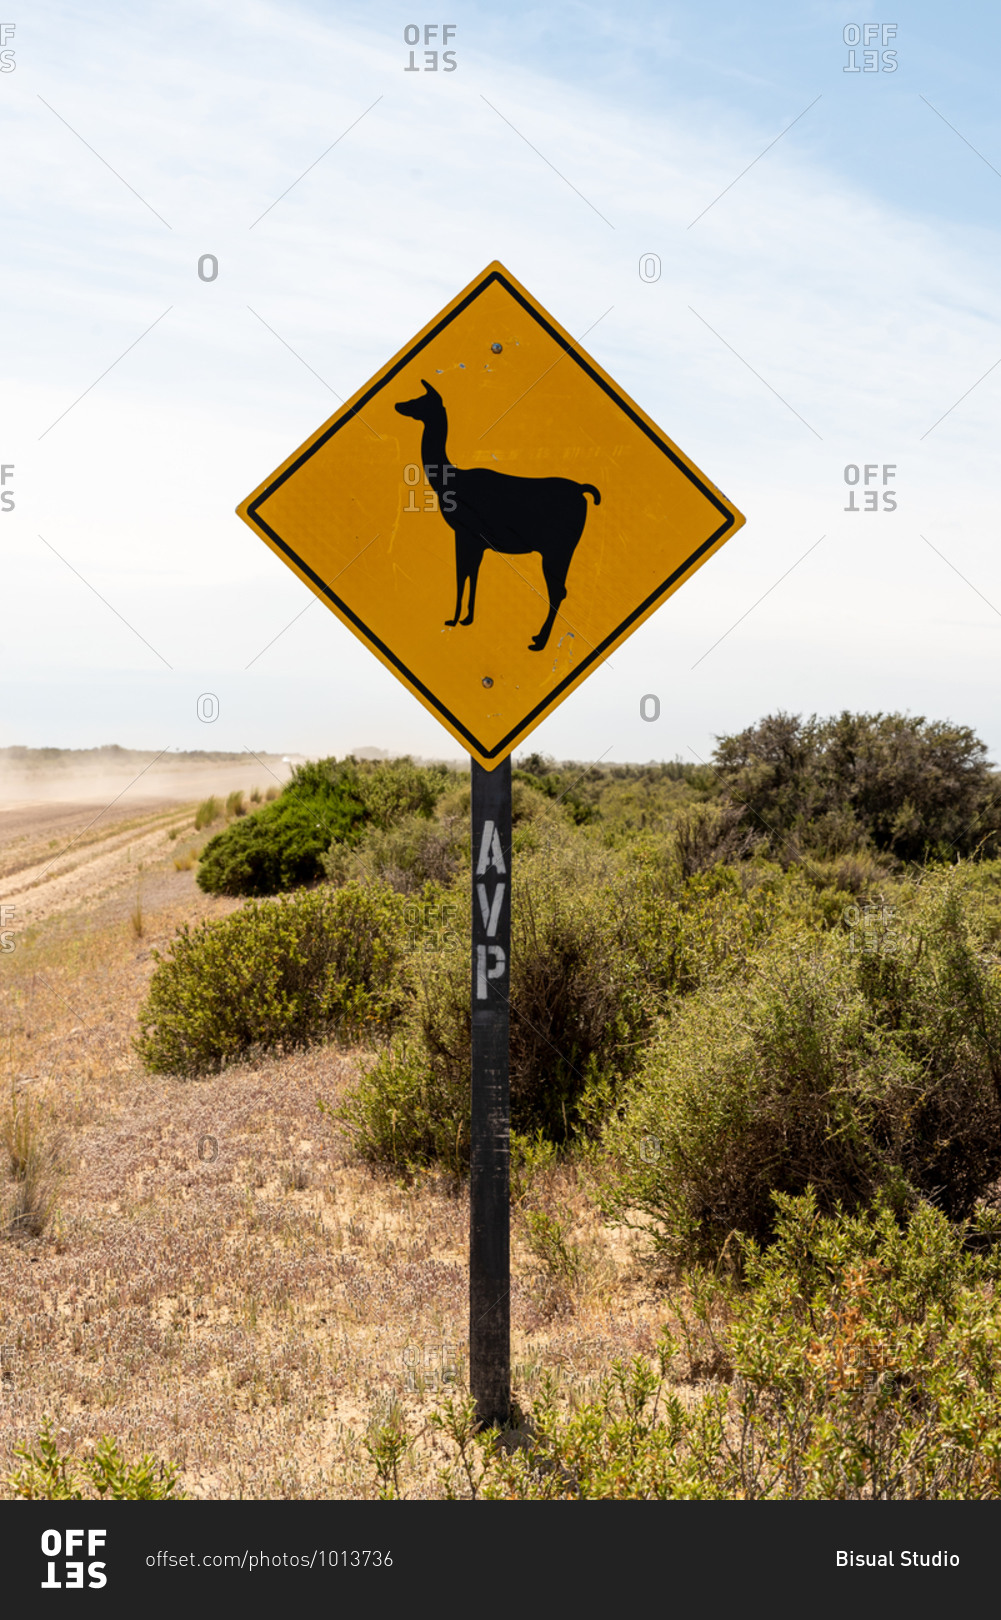 November 11, 2019: A lama traffic sign seen in Patagonia, Argentina